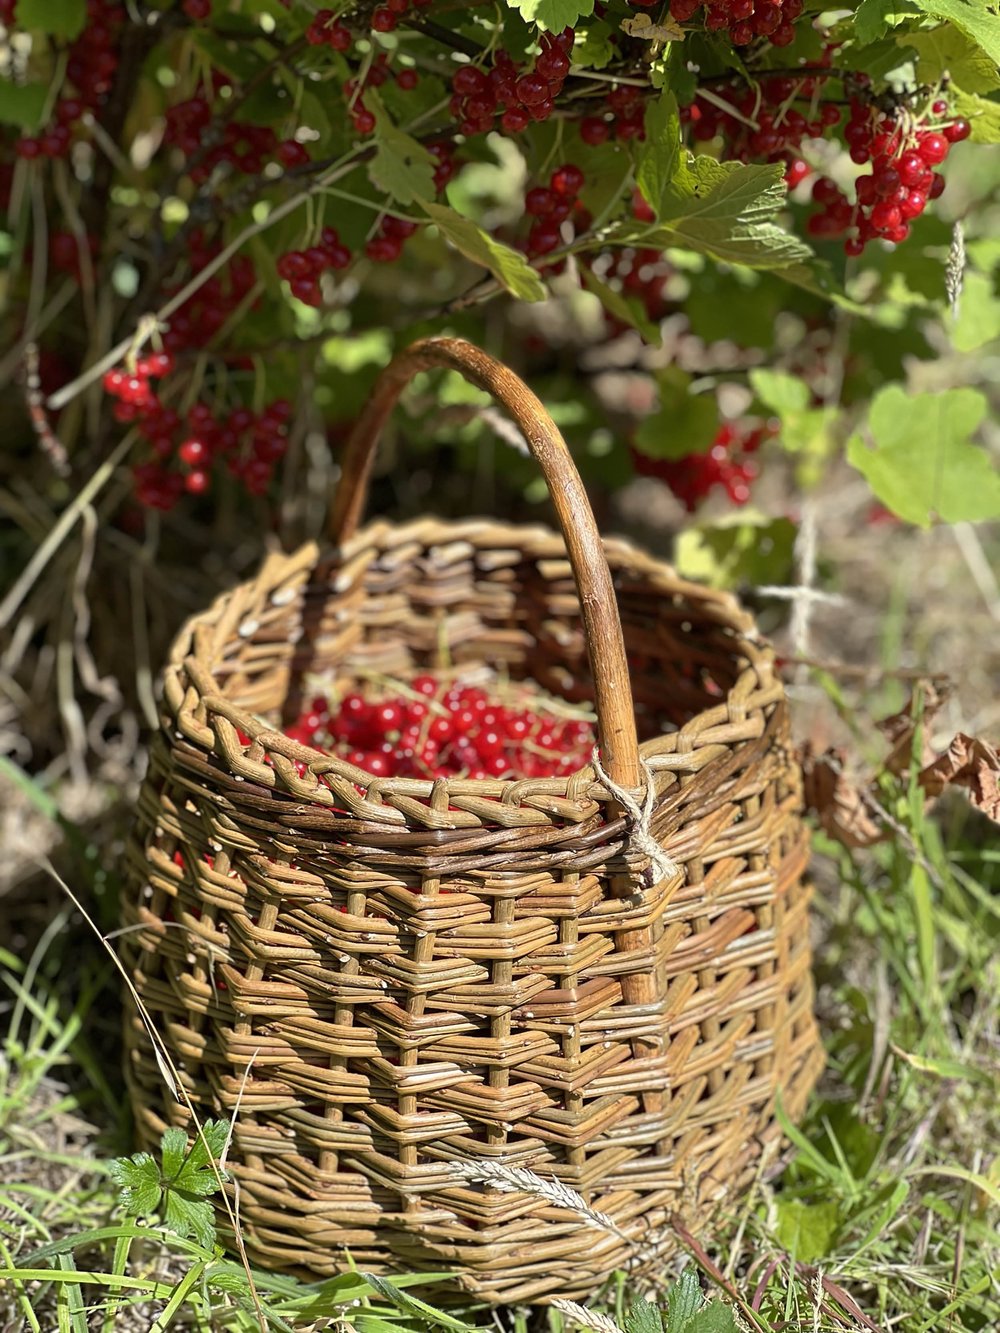 Berry-basket-with-redcurrants-joy-farms-craft-workshops-surrey-3.JPEG